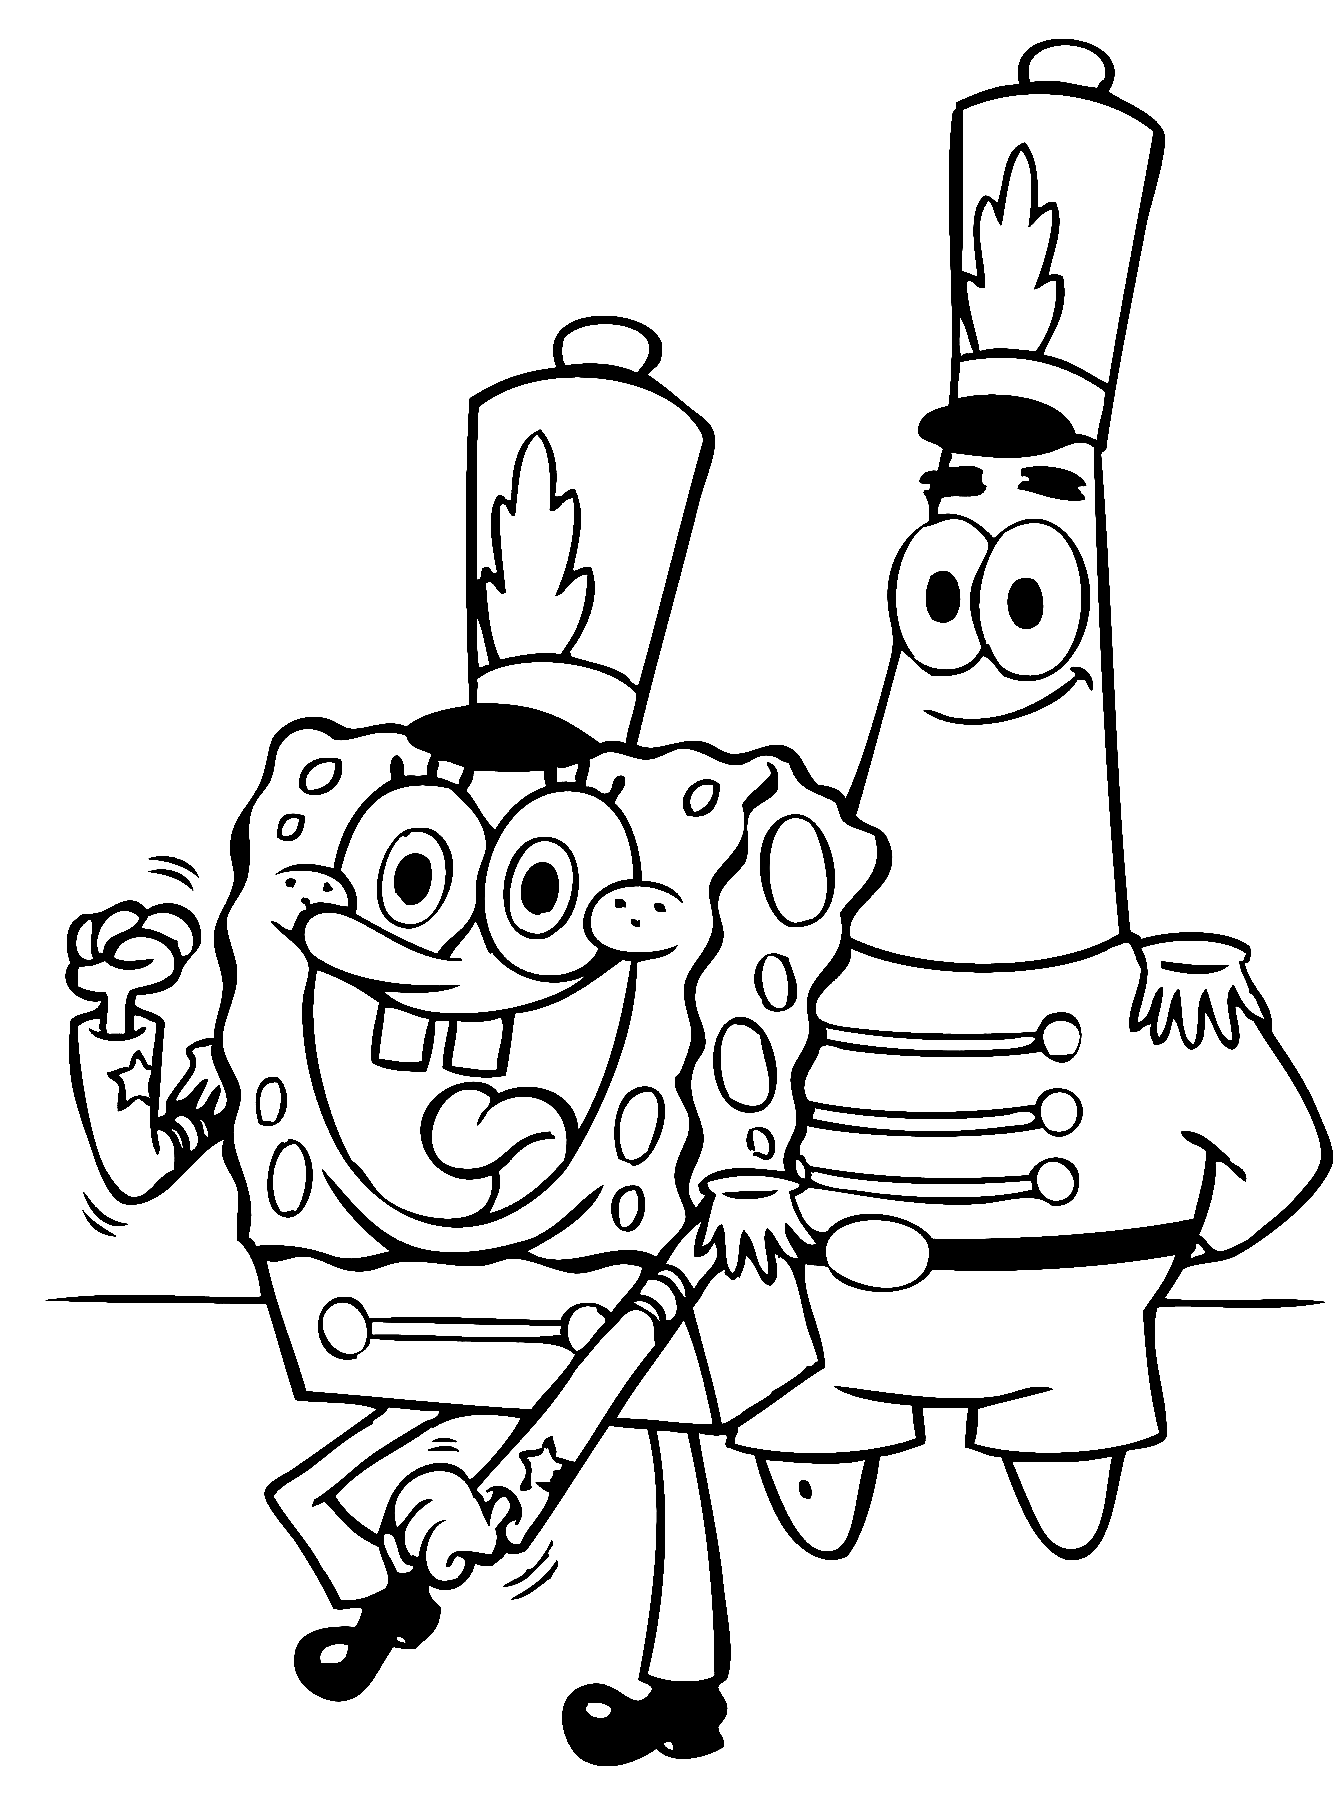 Patrick e Bob Esponja para colorir